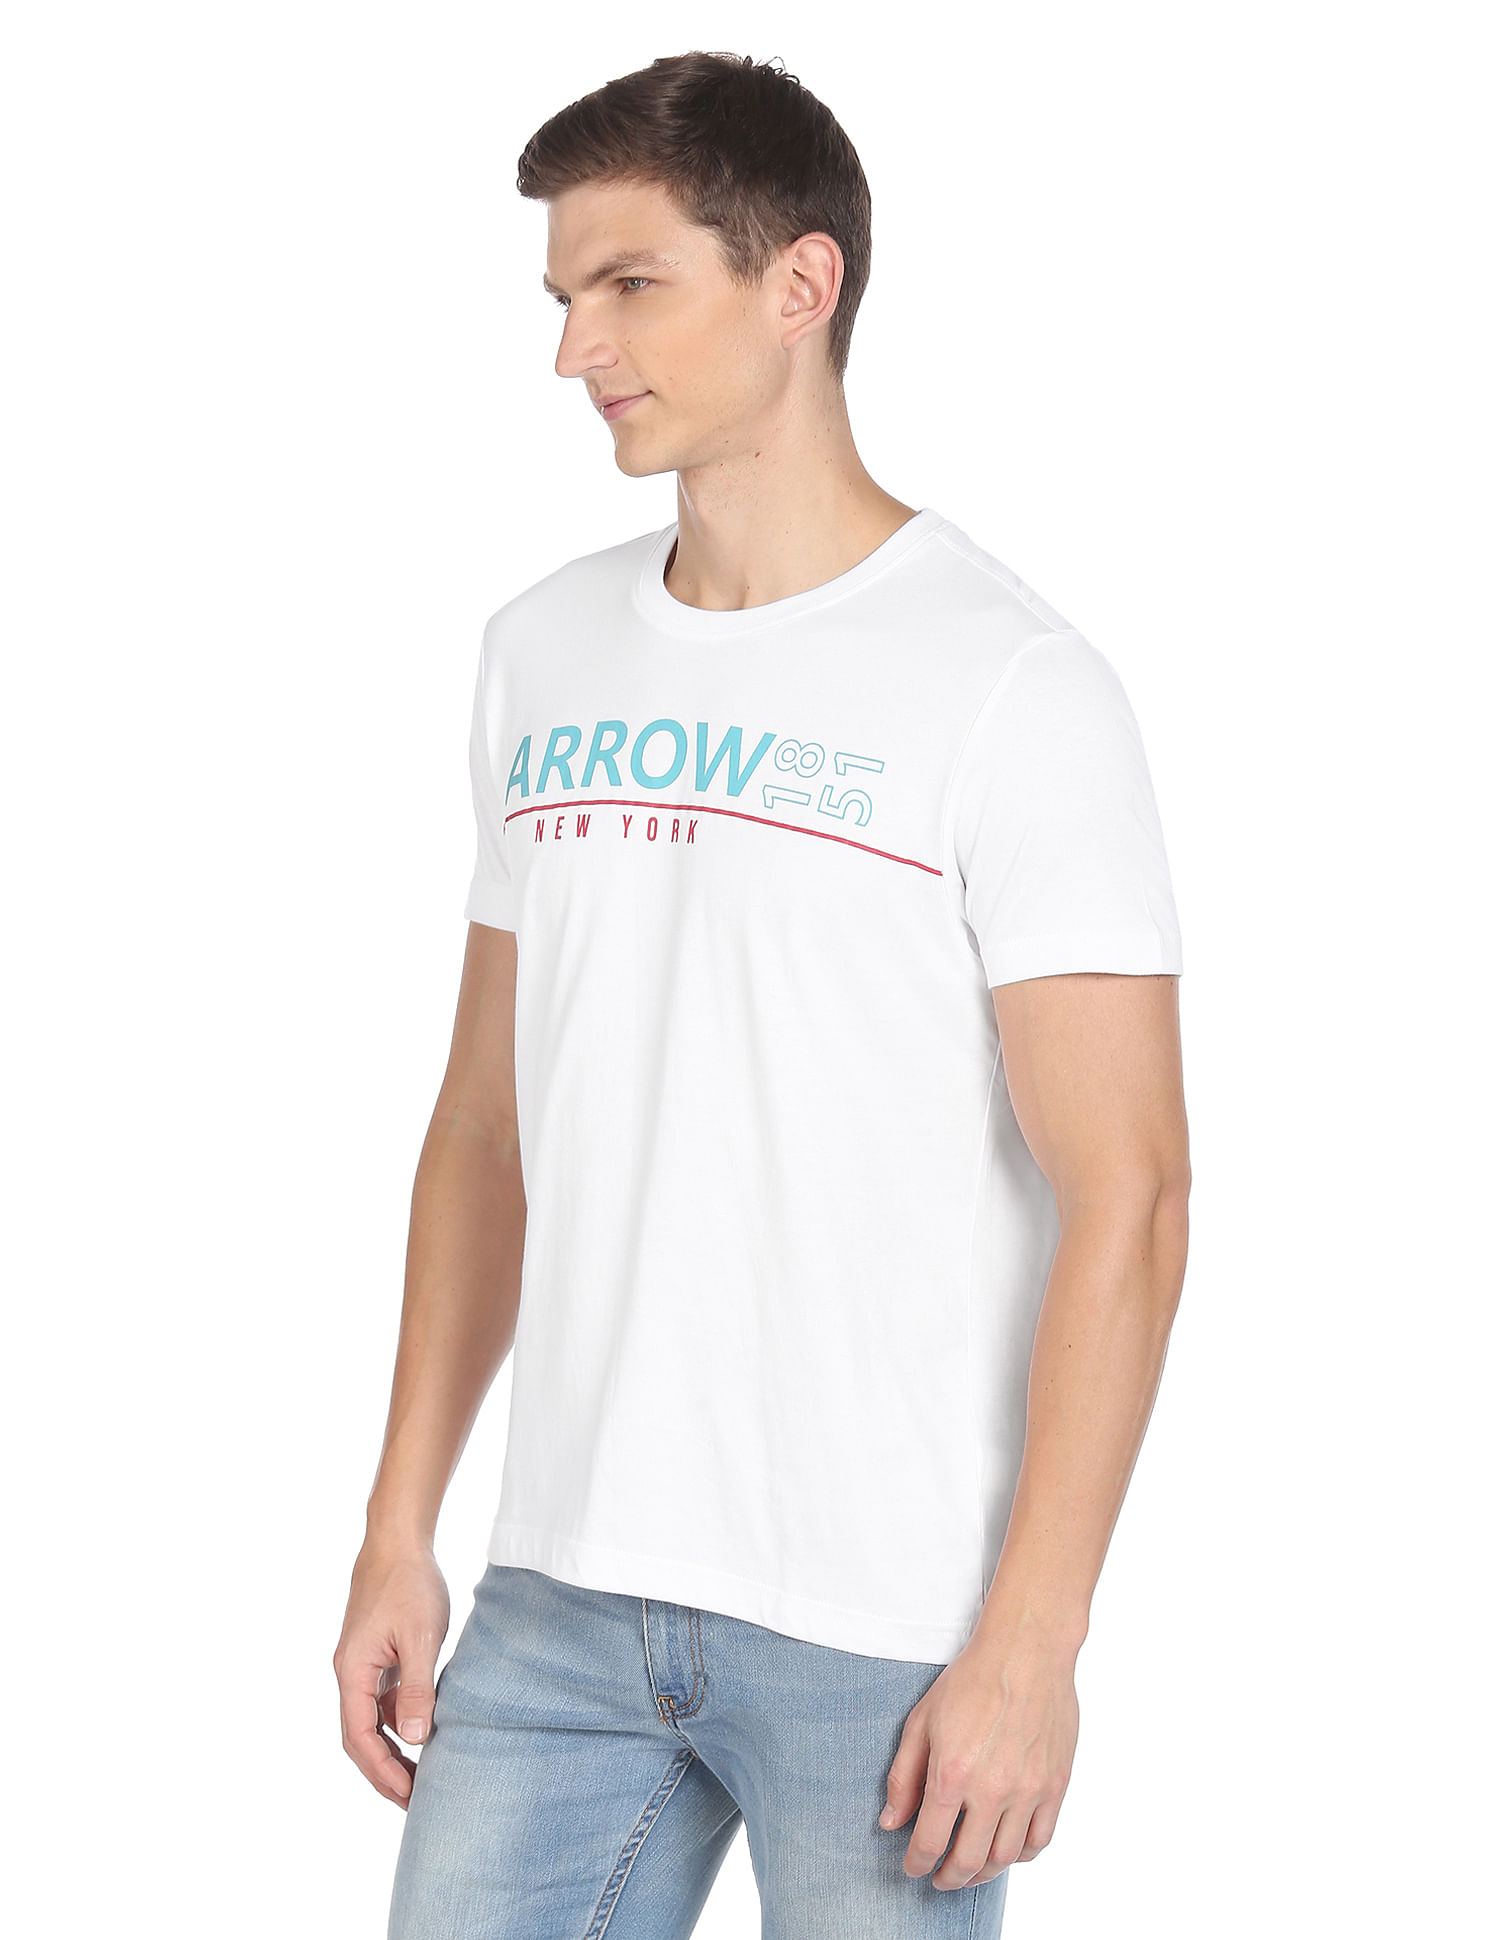 Cotton Print White T-Shirt Brand Men Pure Sports Arrow Buy